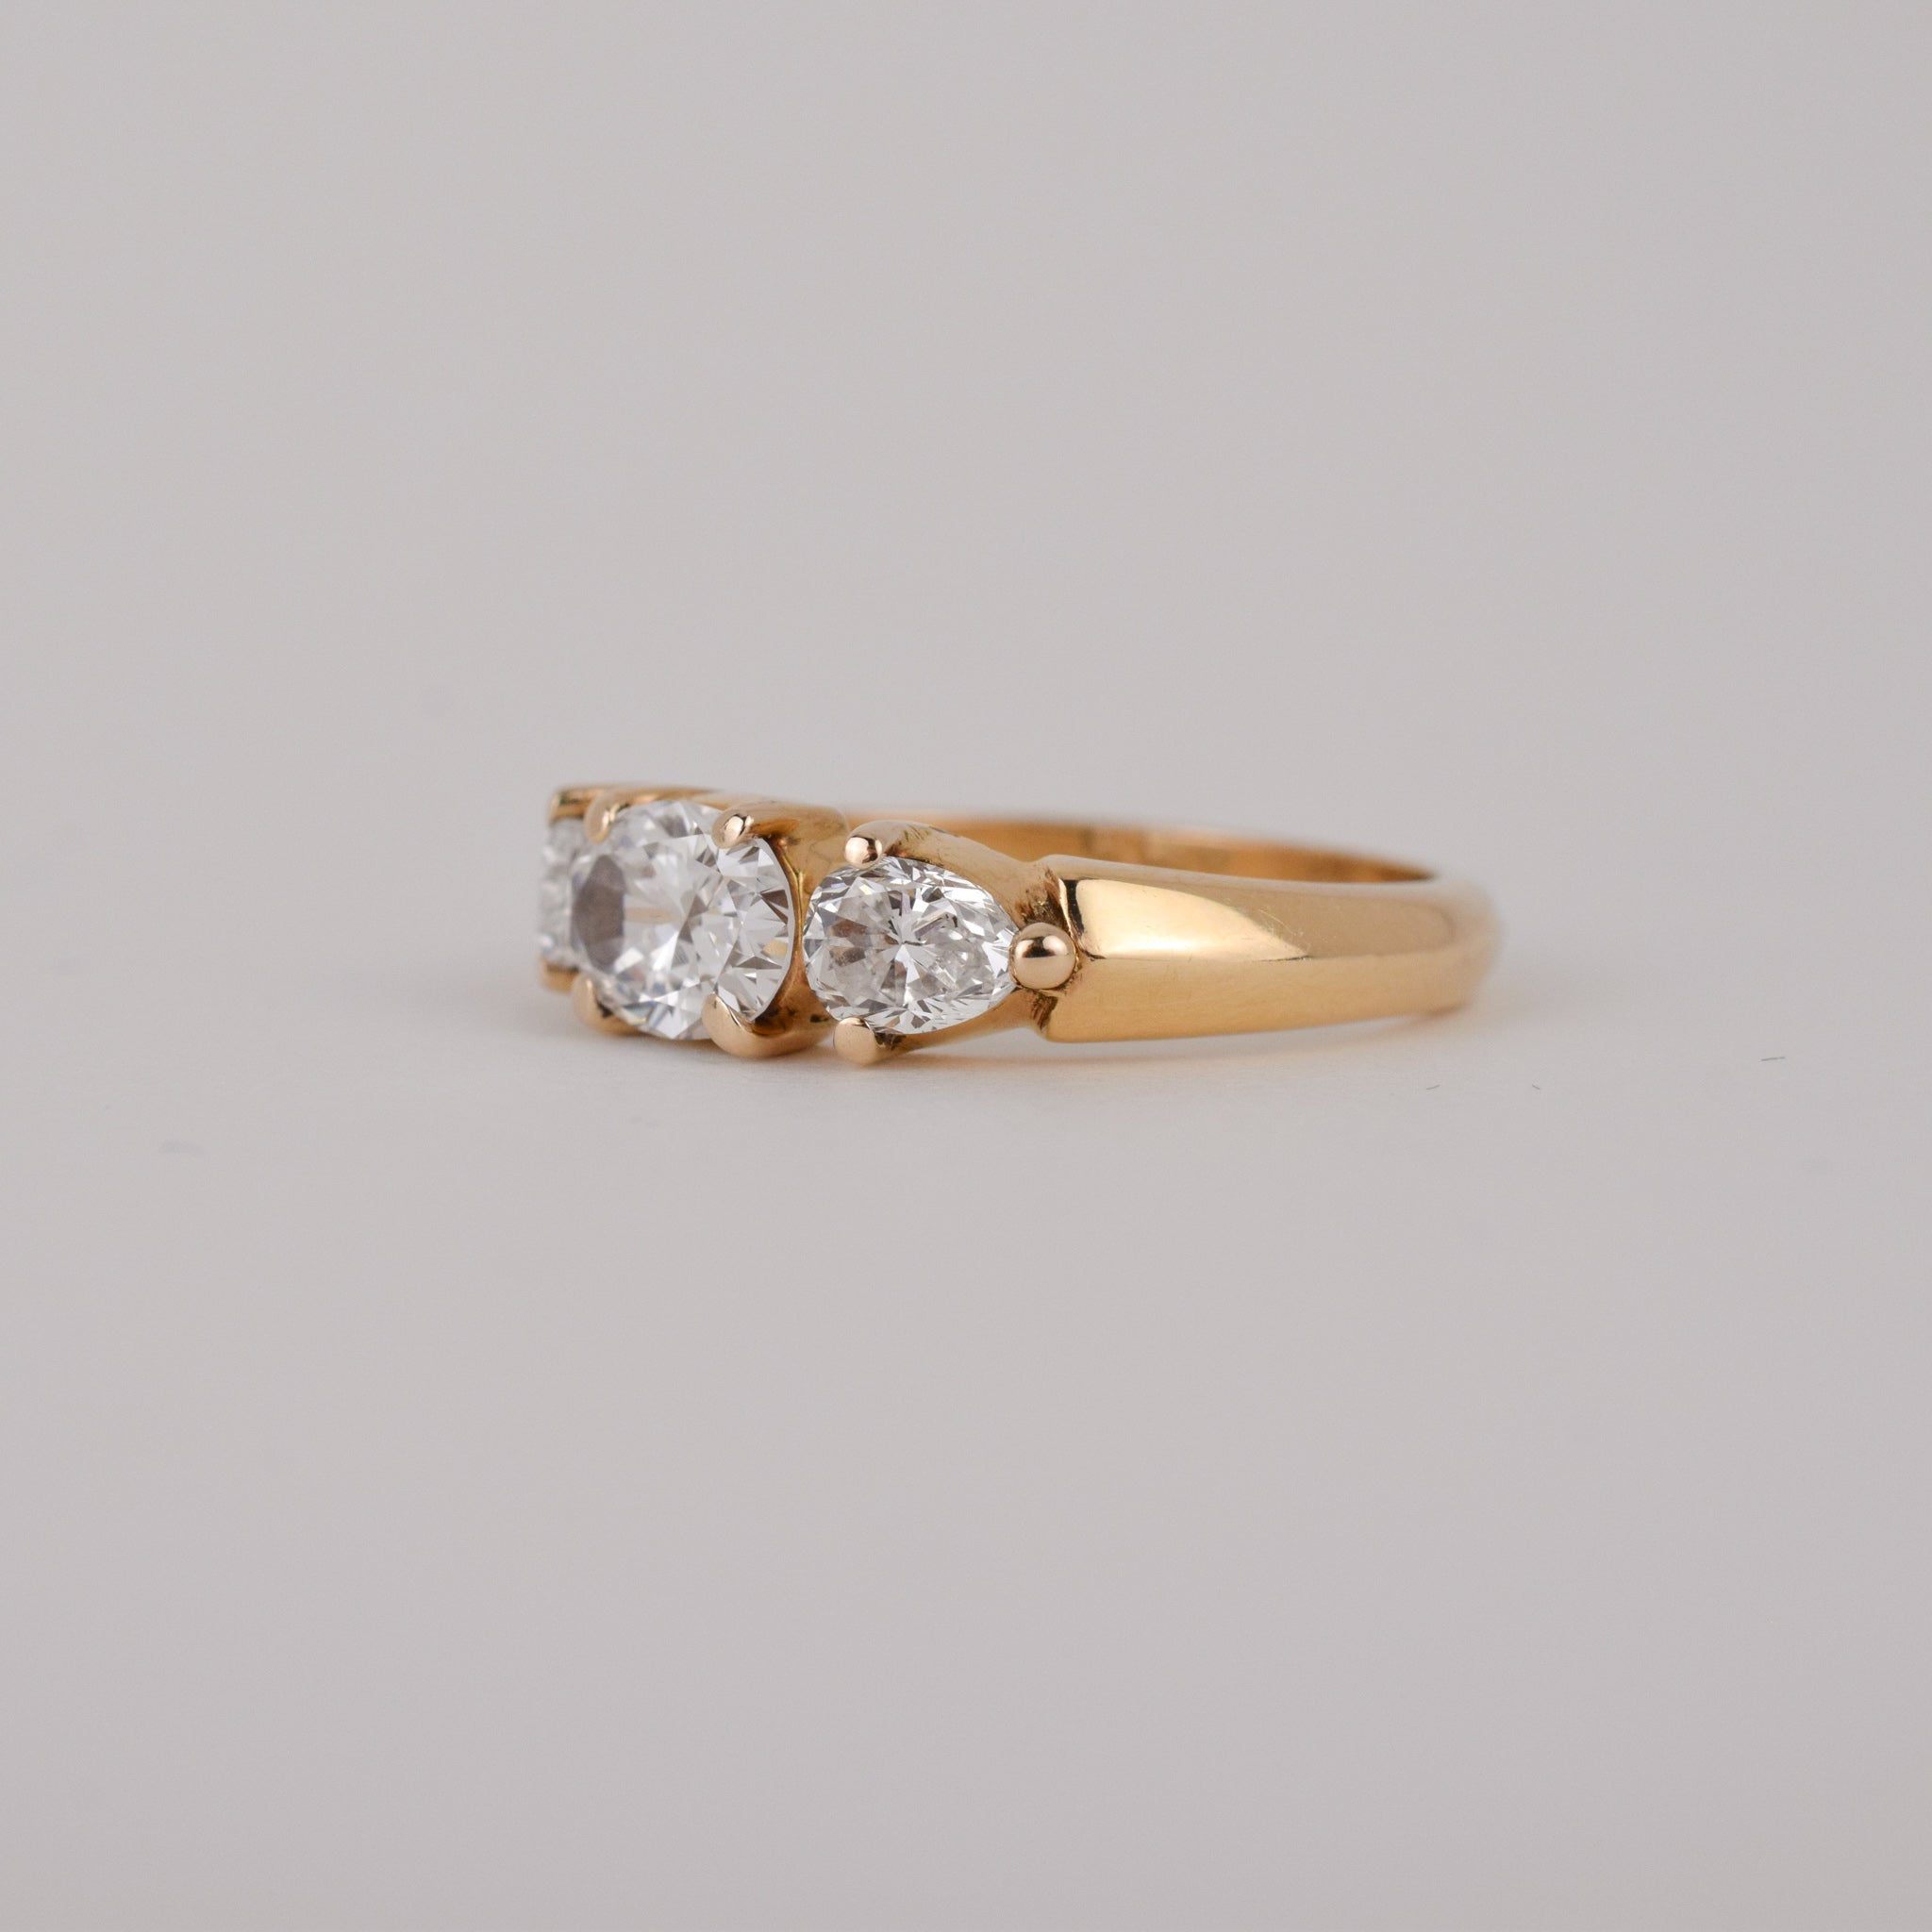 Spectacular oval diamond trilogy engagement ring, folklor